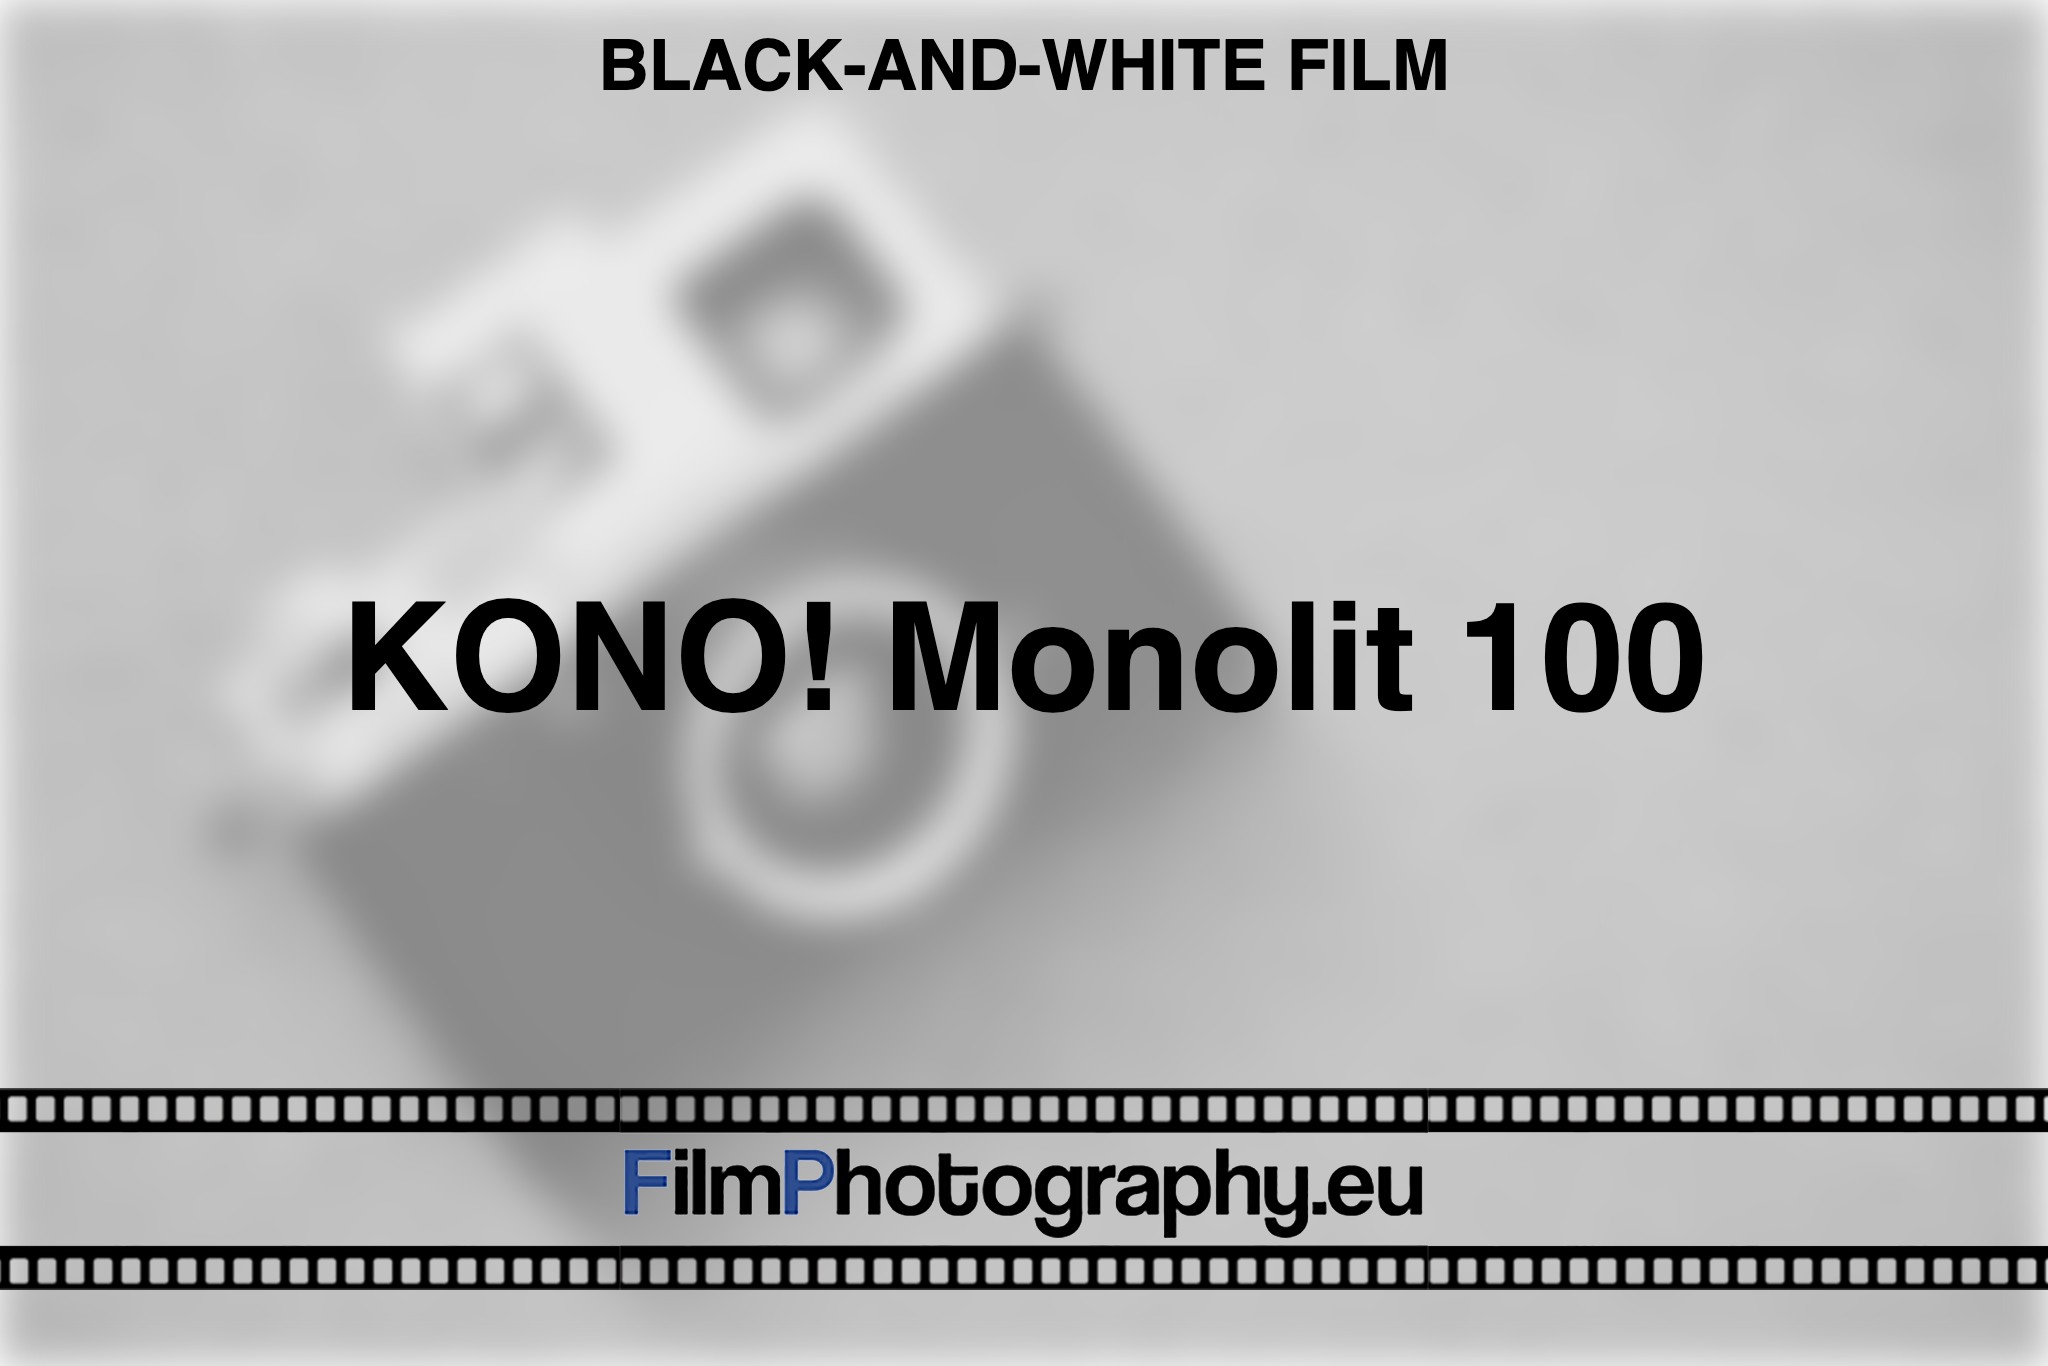 kono-monolit-100-black-and-white-film-bnv